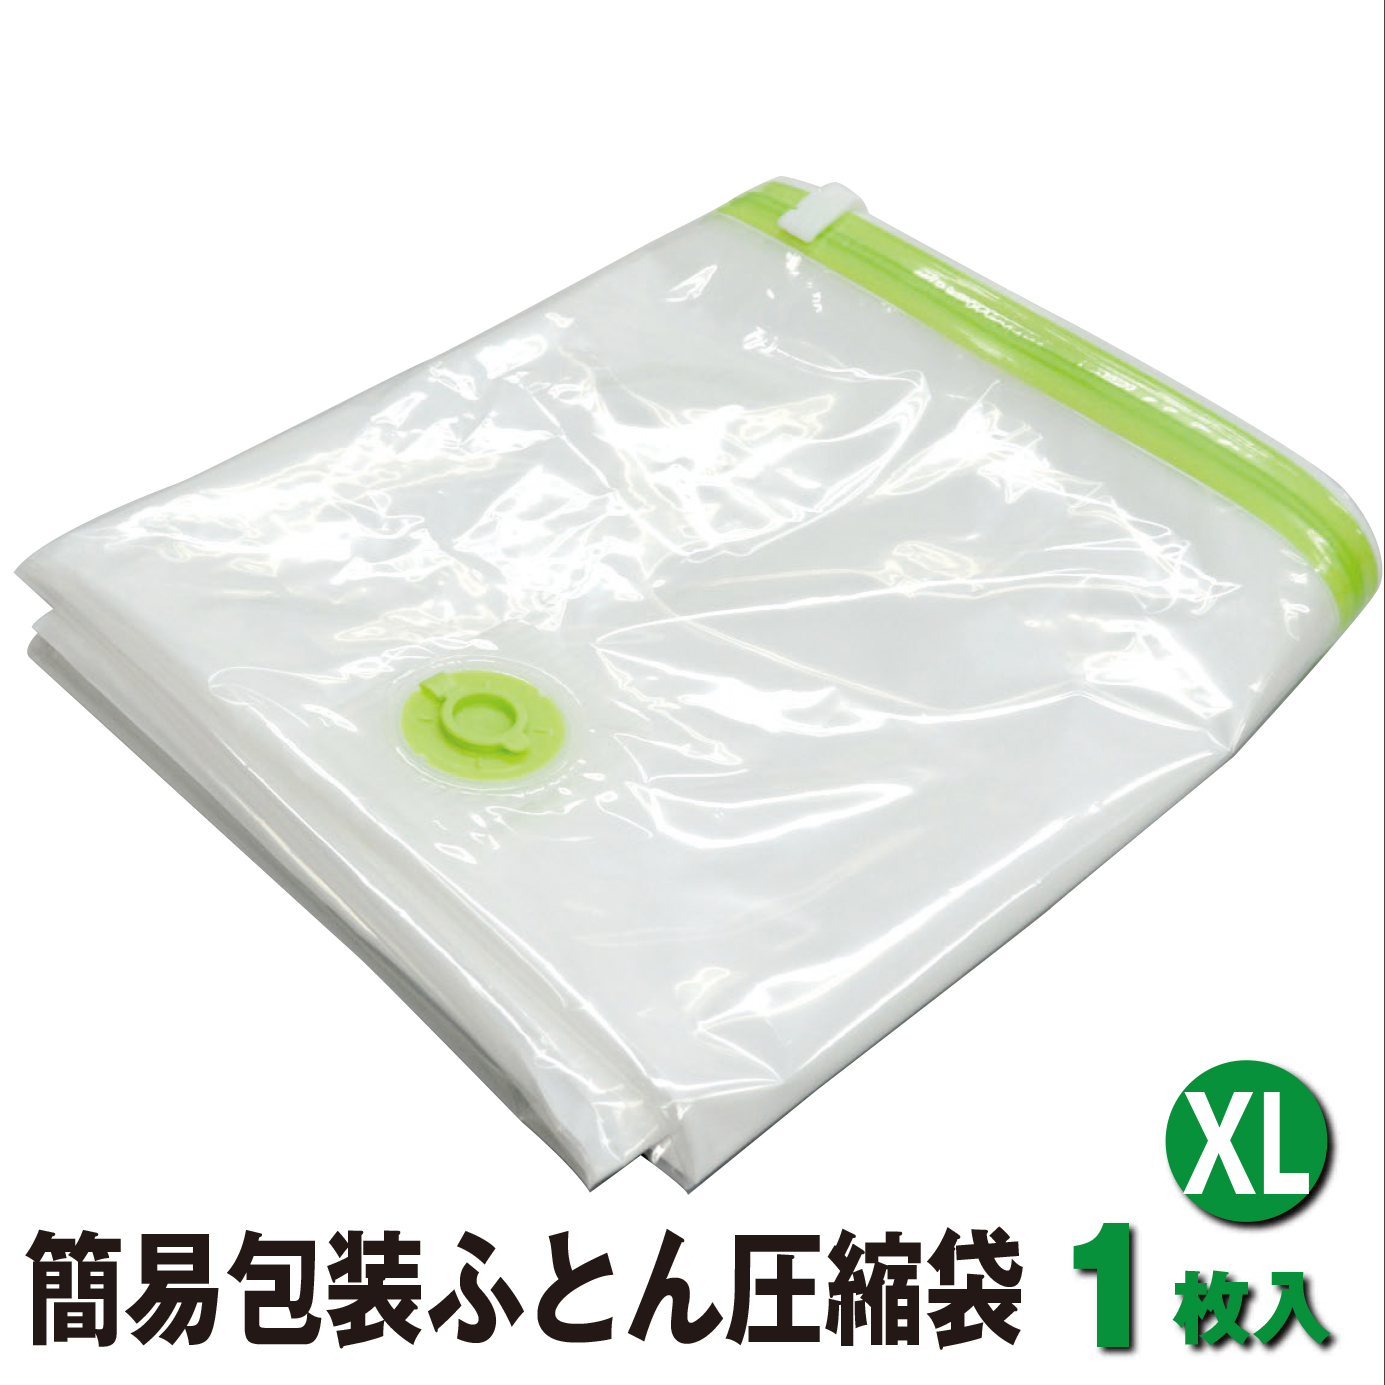 布団用圧縮袋 超特大ふとん圧縮袋XL (1枚入) 簡易包装 大きい 大型 布団一式 圧縮袋 布団収納袋 布団収納ケース バルブ式